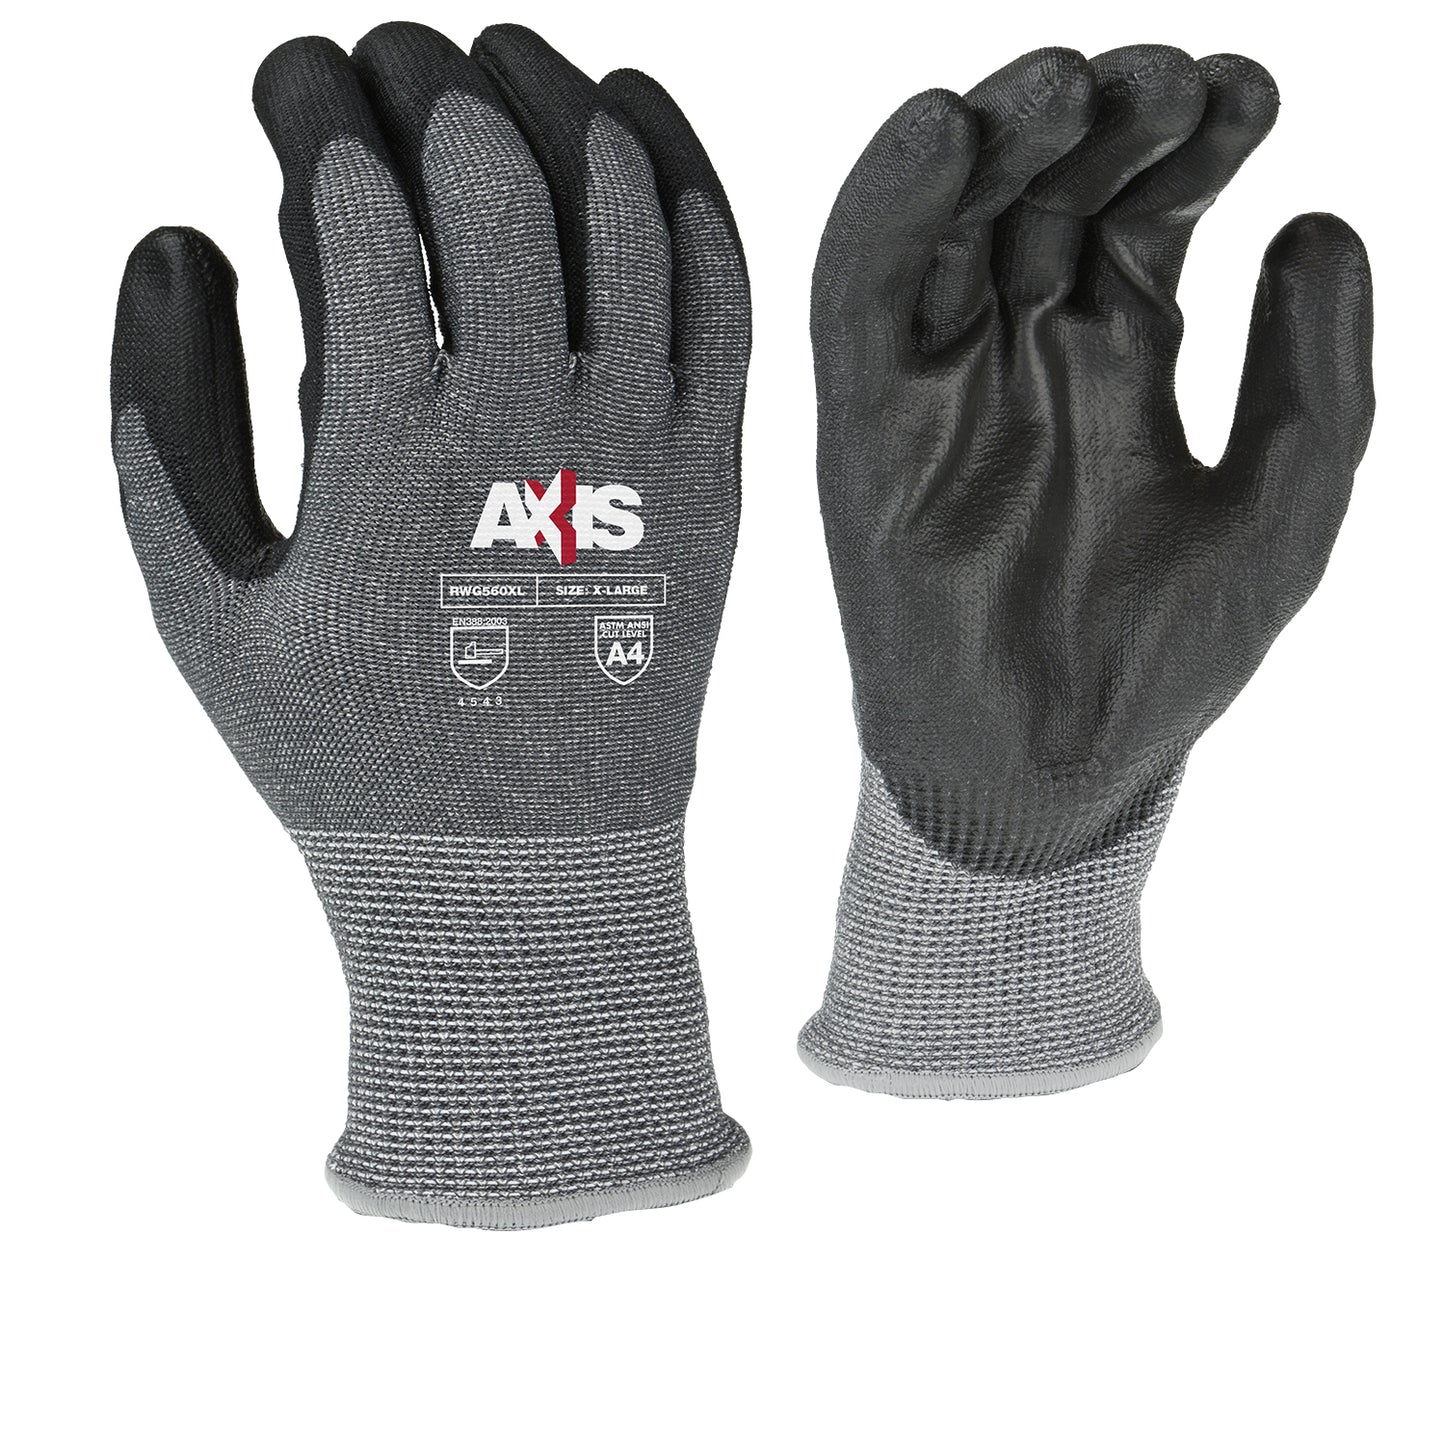 Radians RWG560 AXIS Cut Protection Level A4 PU Coated Glove